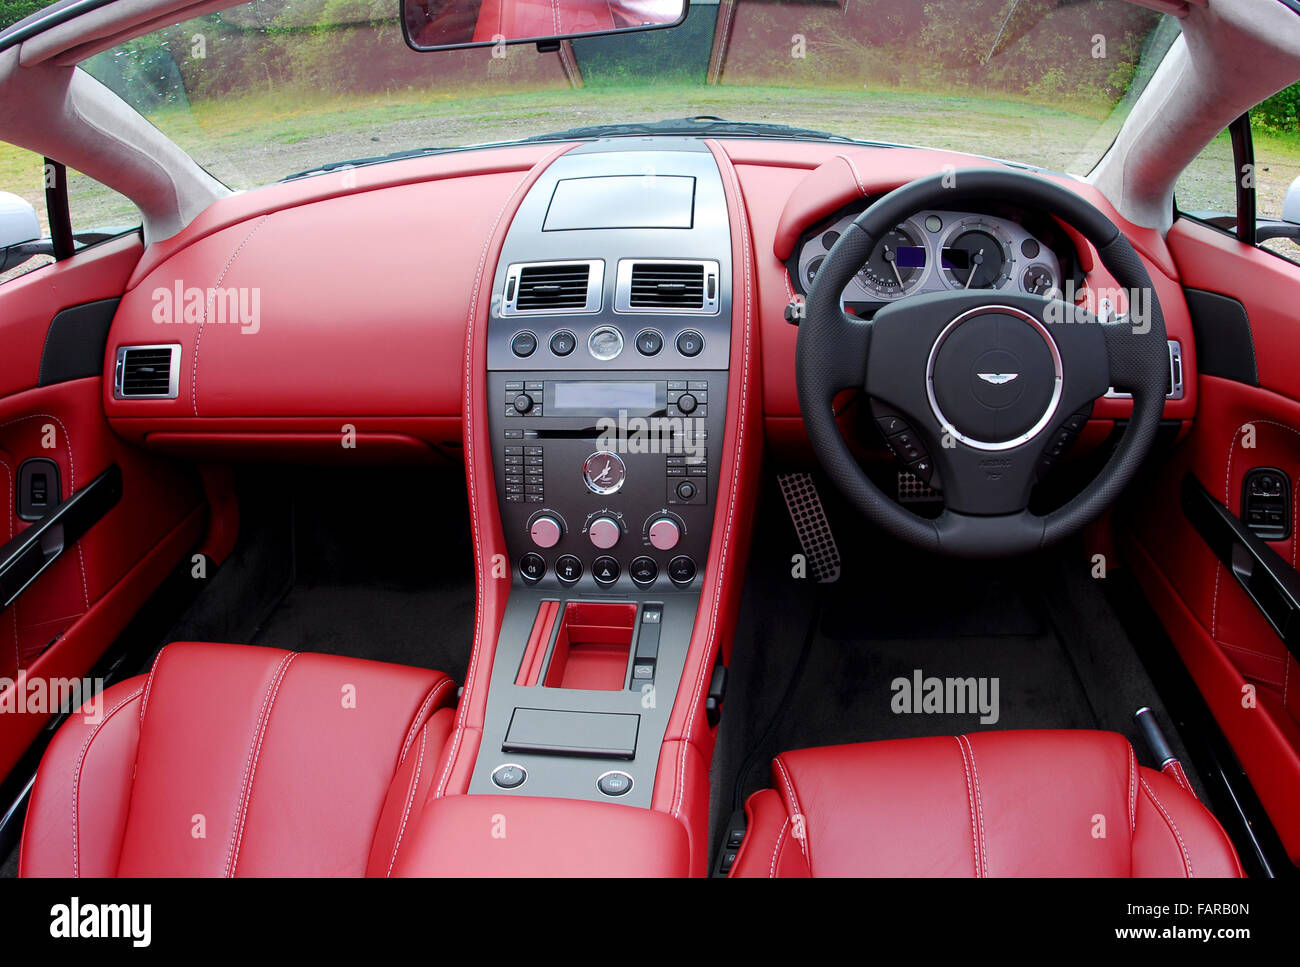 2007 Aston Martin Vantage Convertible Super Car Red Leather